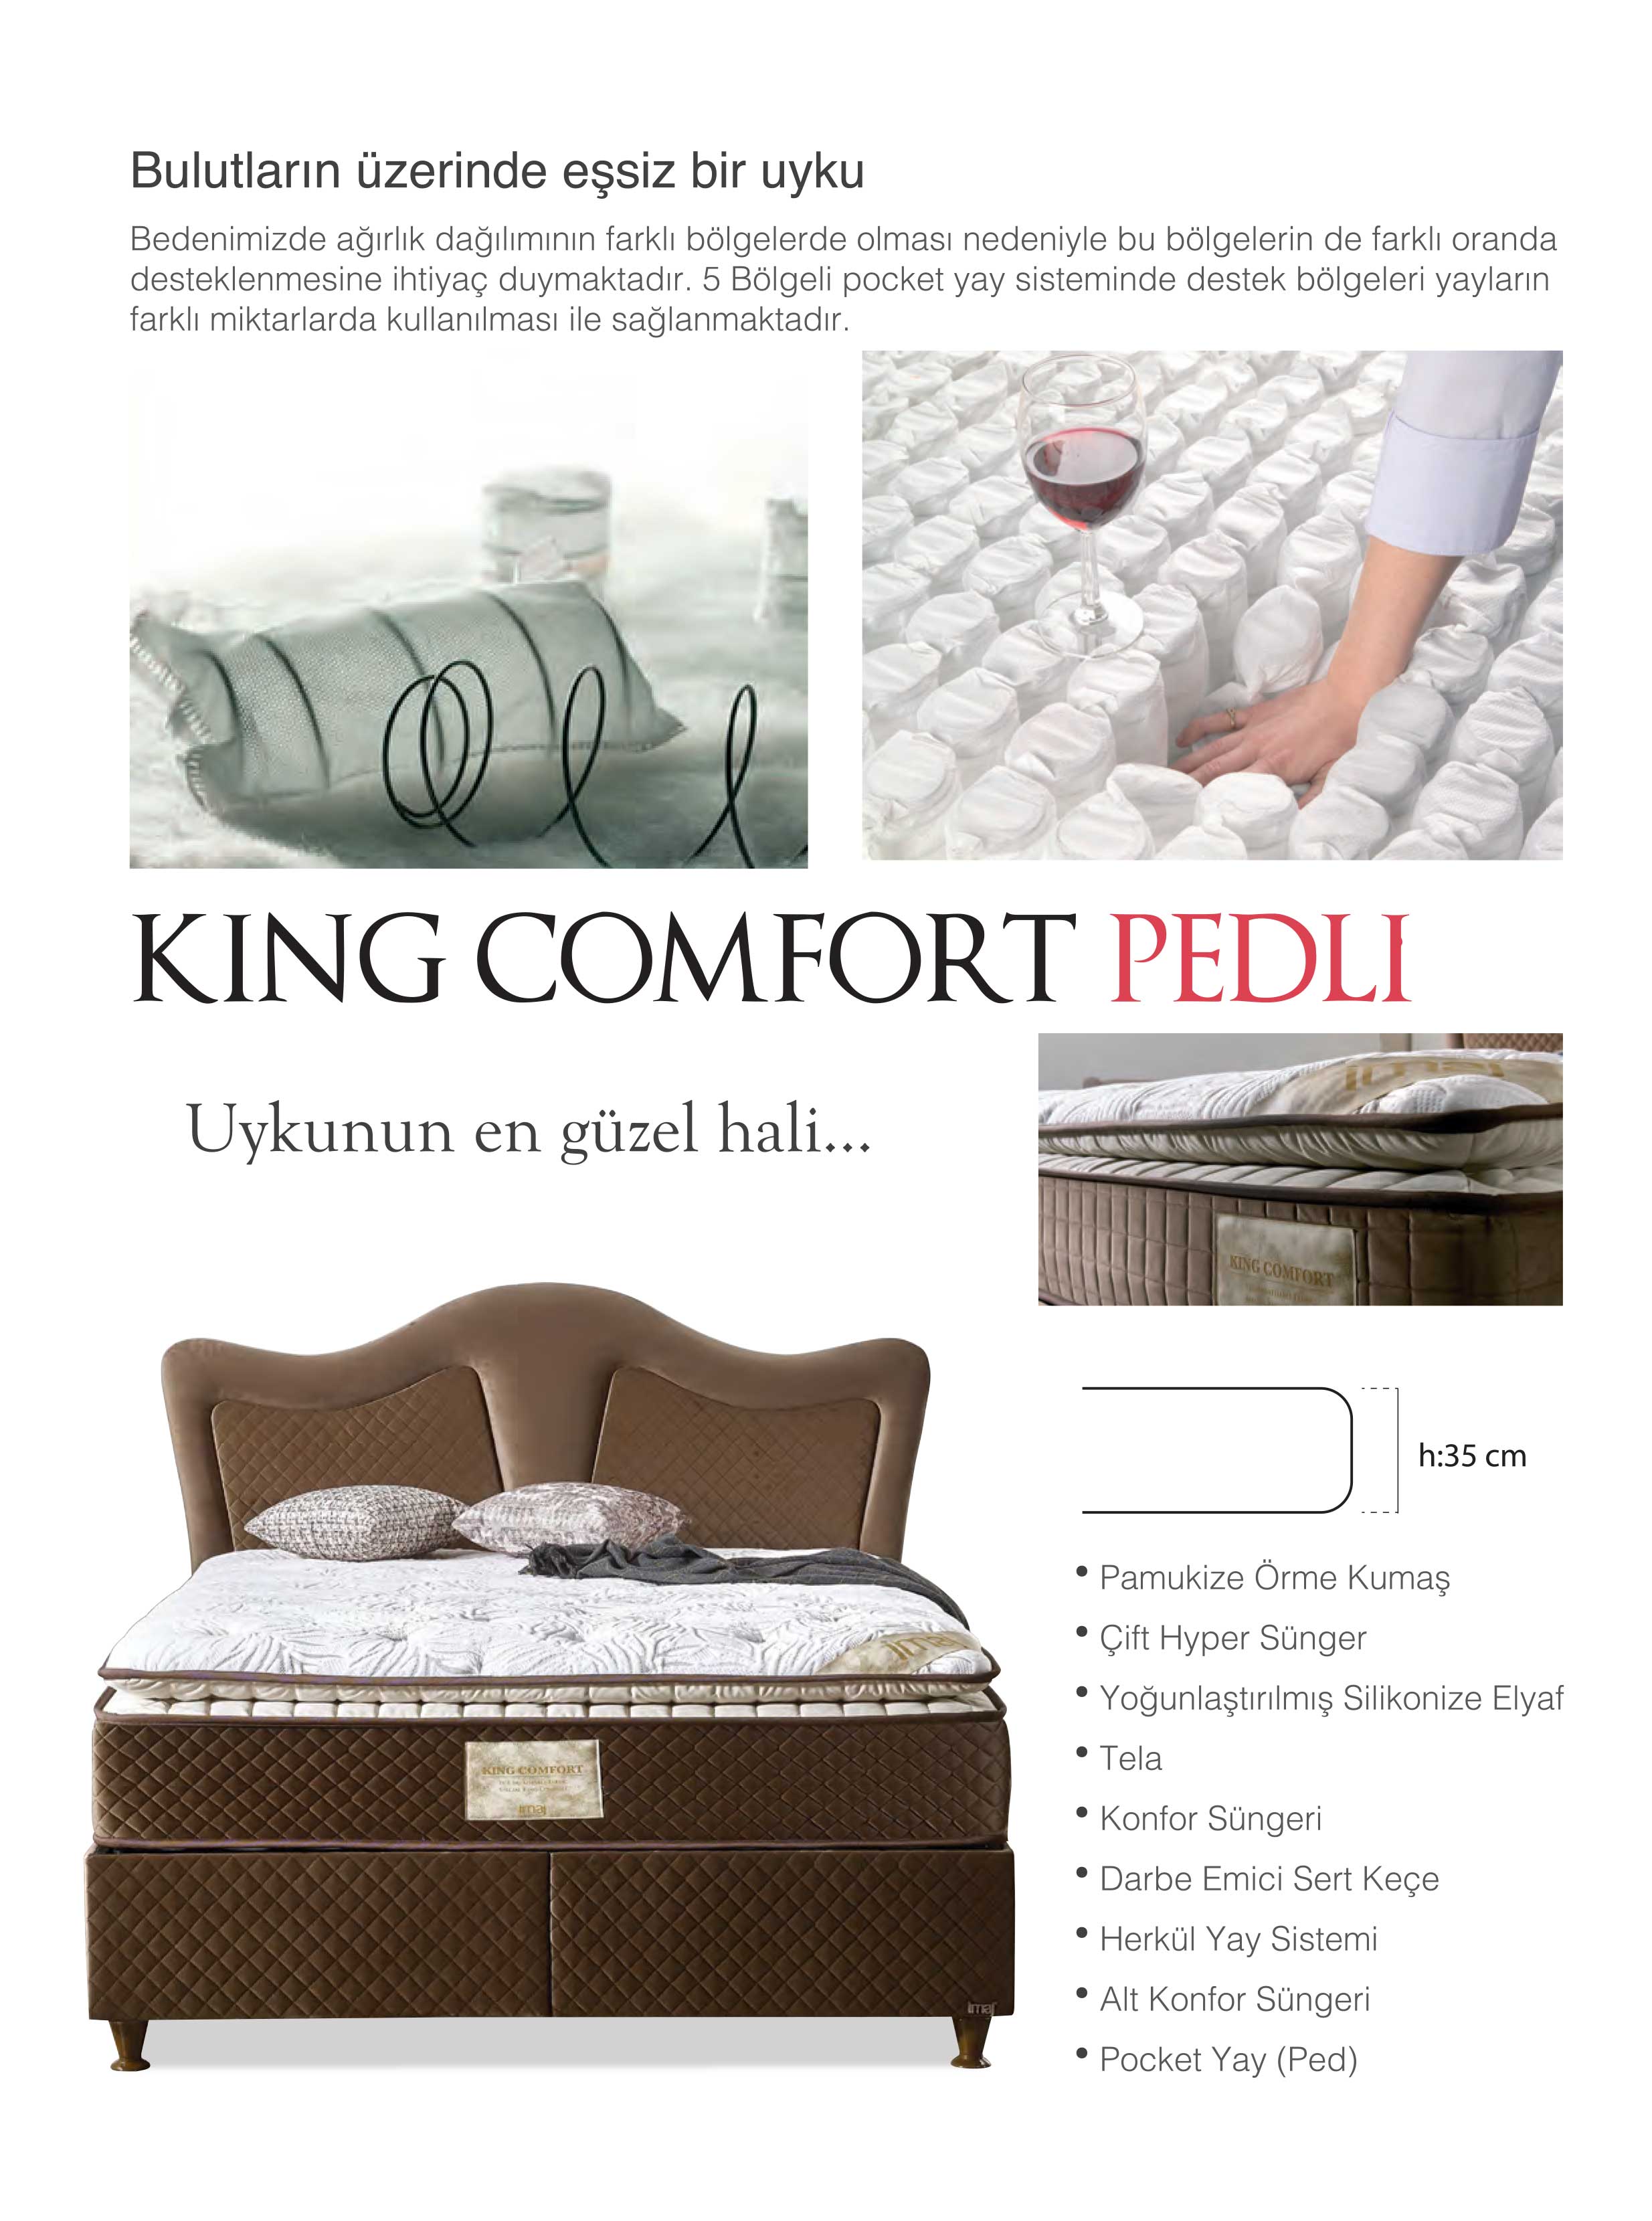 King Comfort Pedli